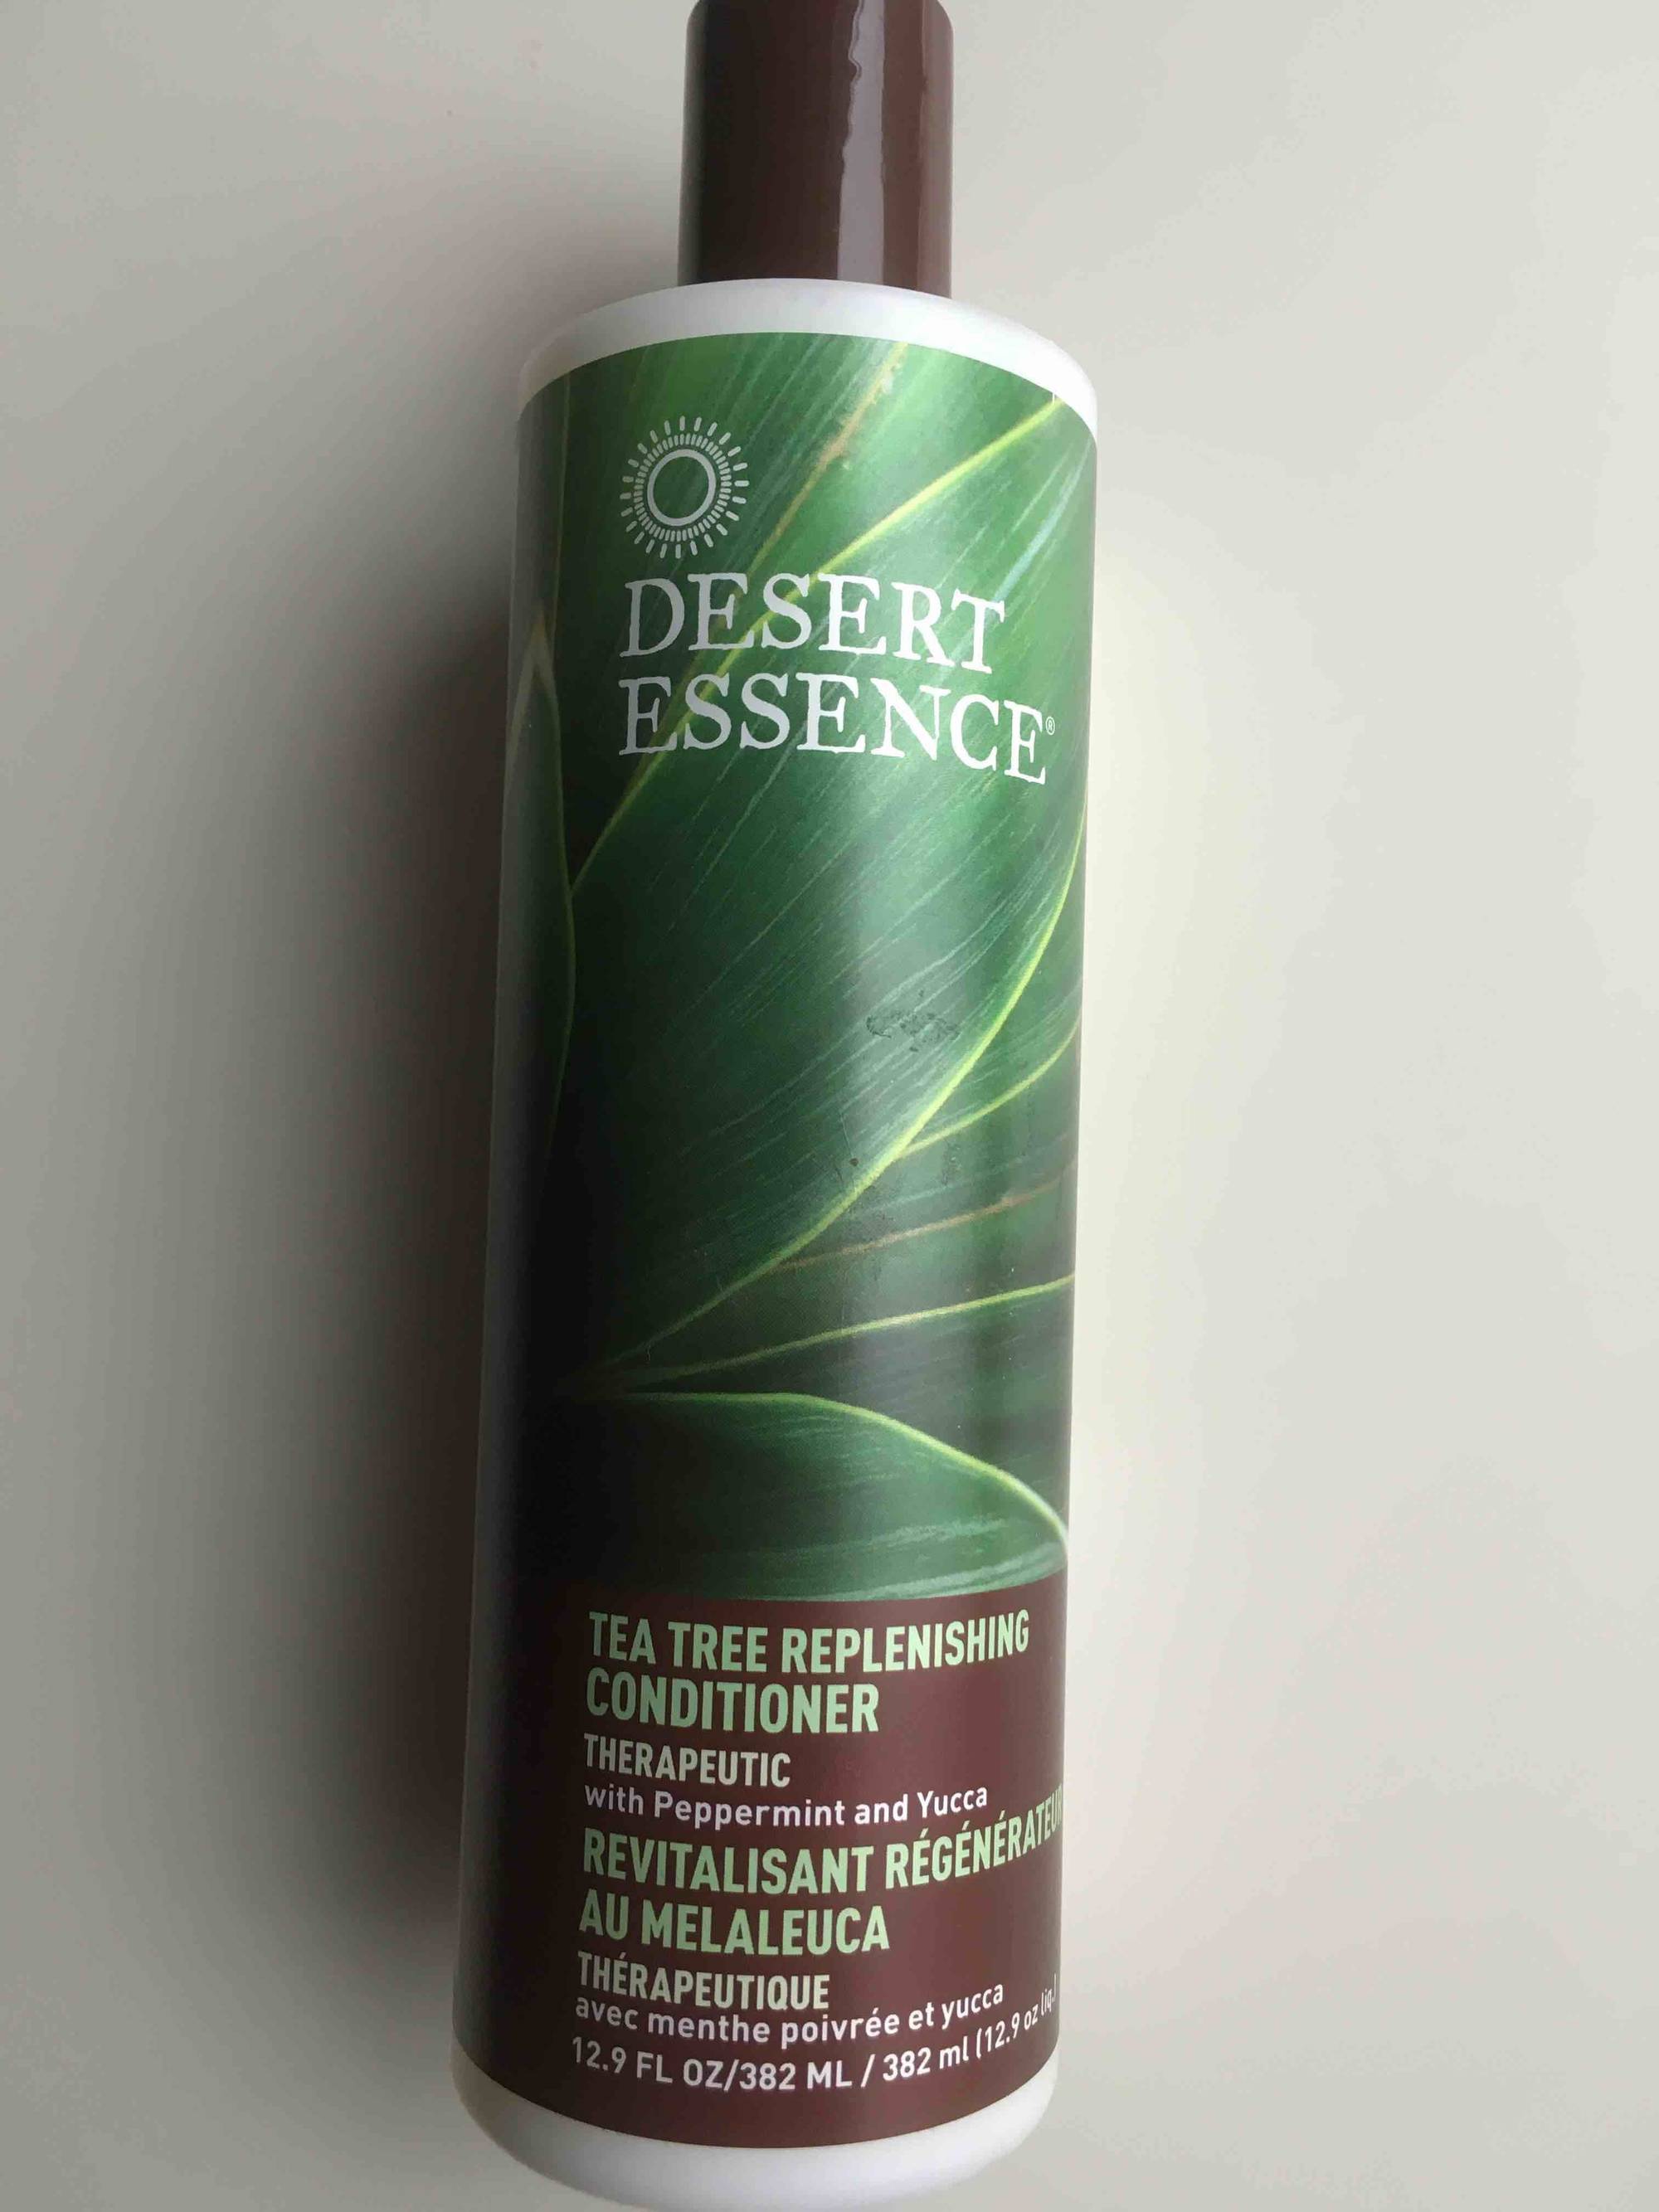 DESERT ESSENCE - Tea tree replenishing conditioner